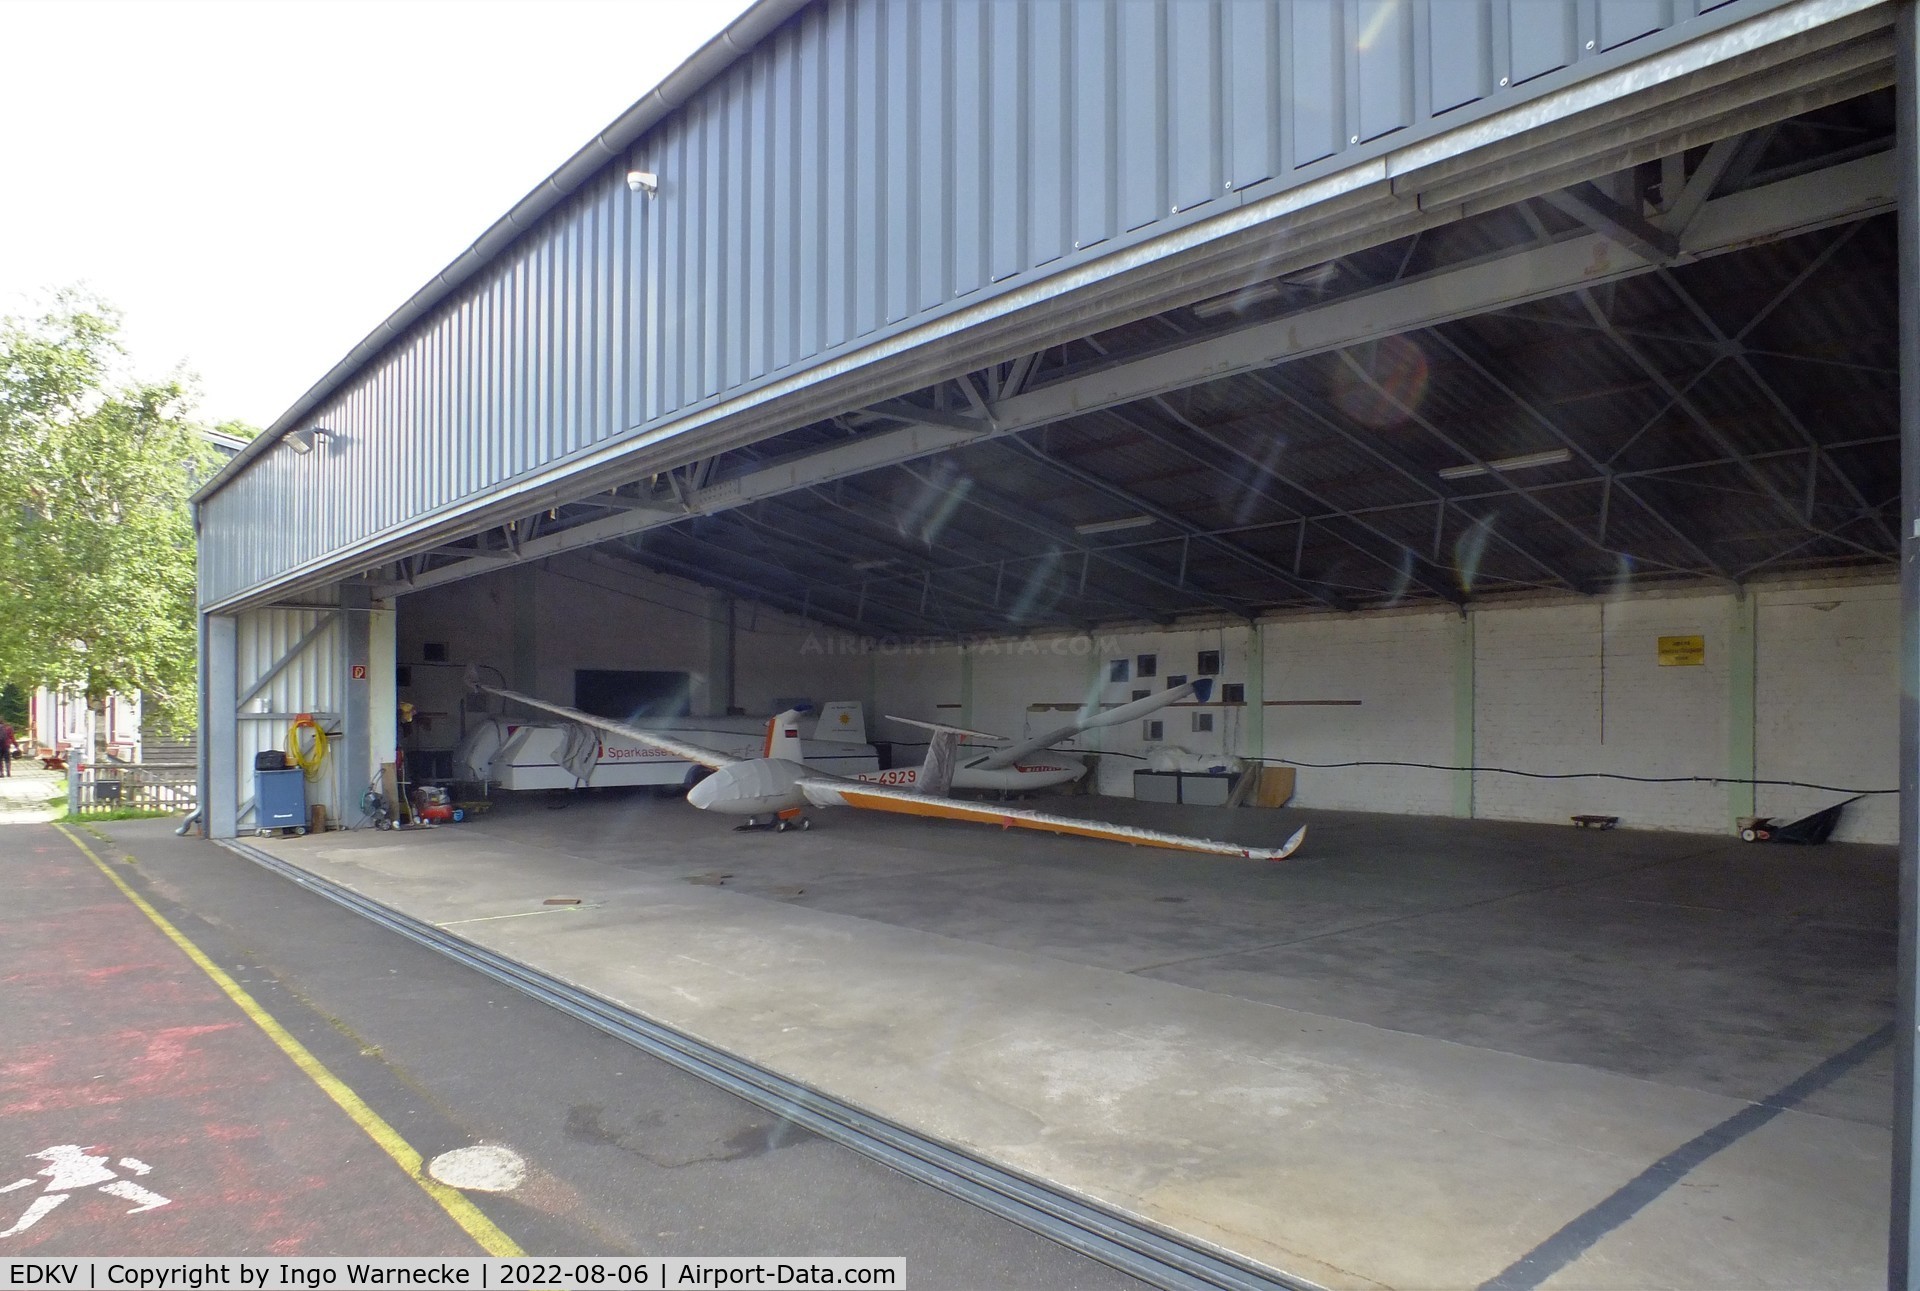 Dahlemer Binz Airport, Dahlem Germany (EDKV) - a look inside the eastern hangar at Dahlemer Binz airfield